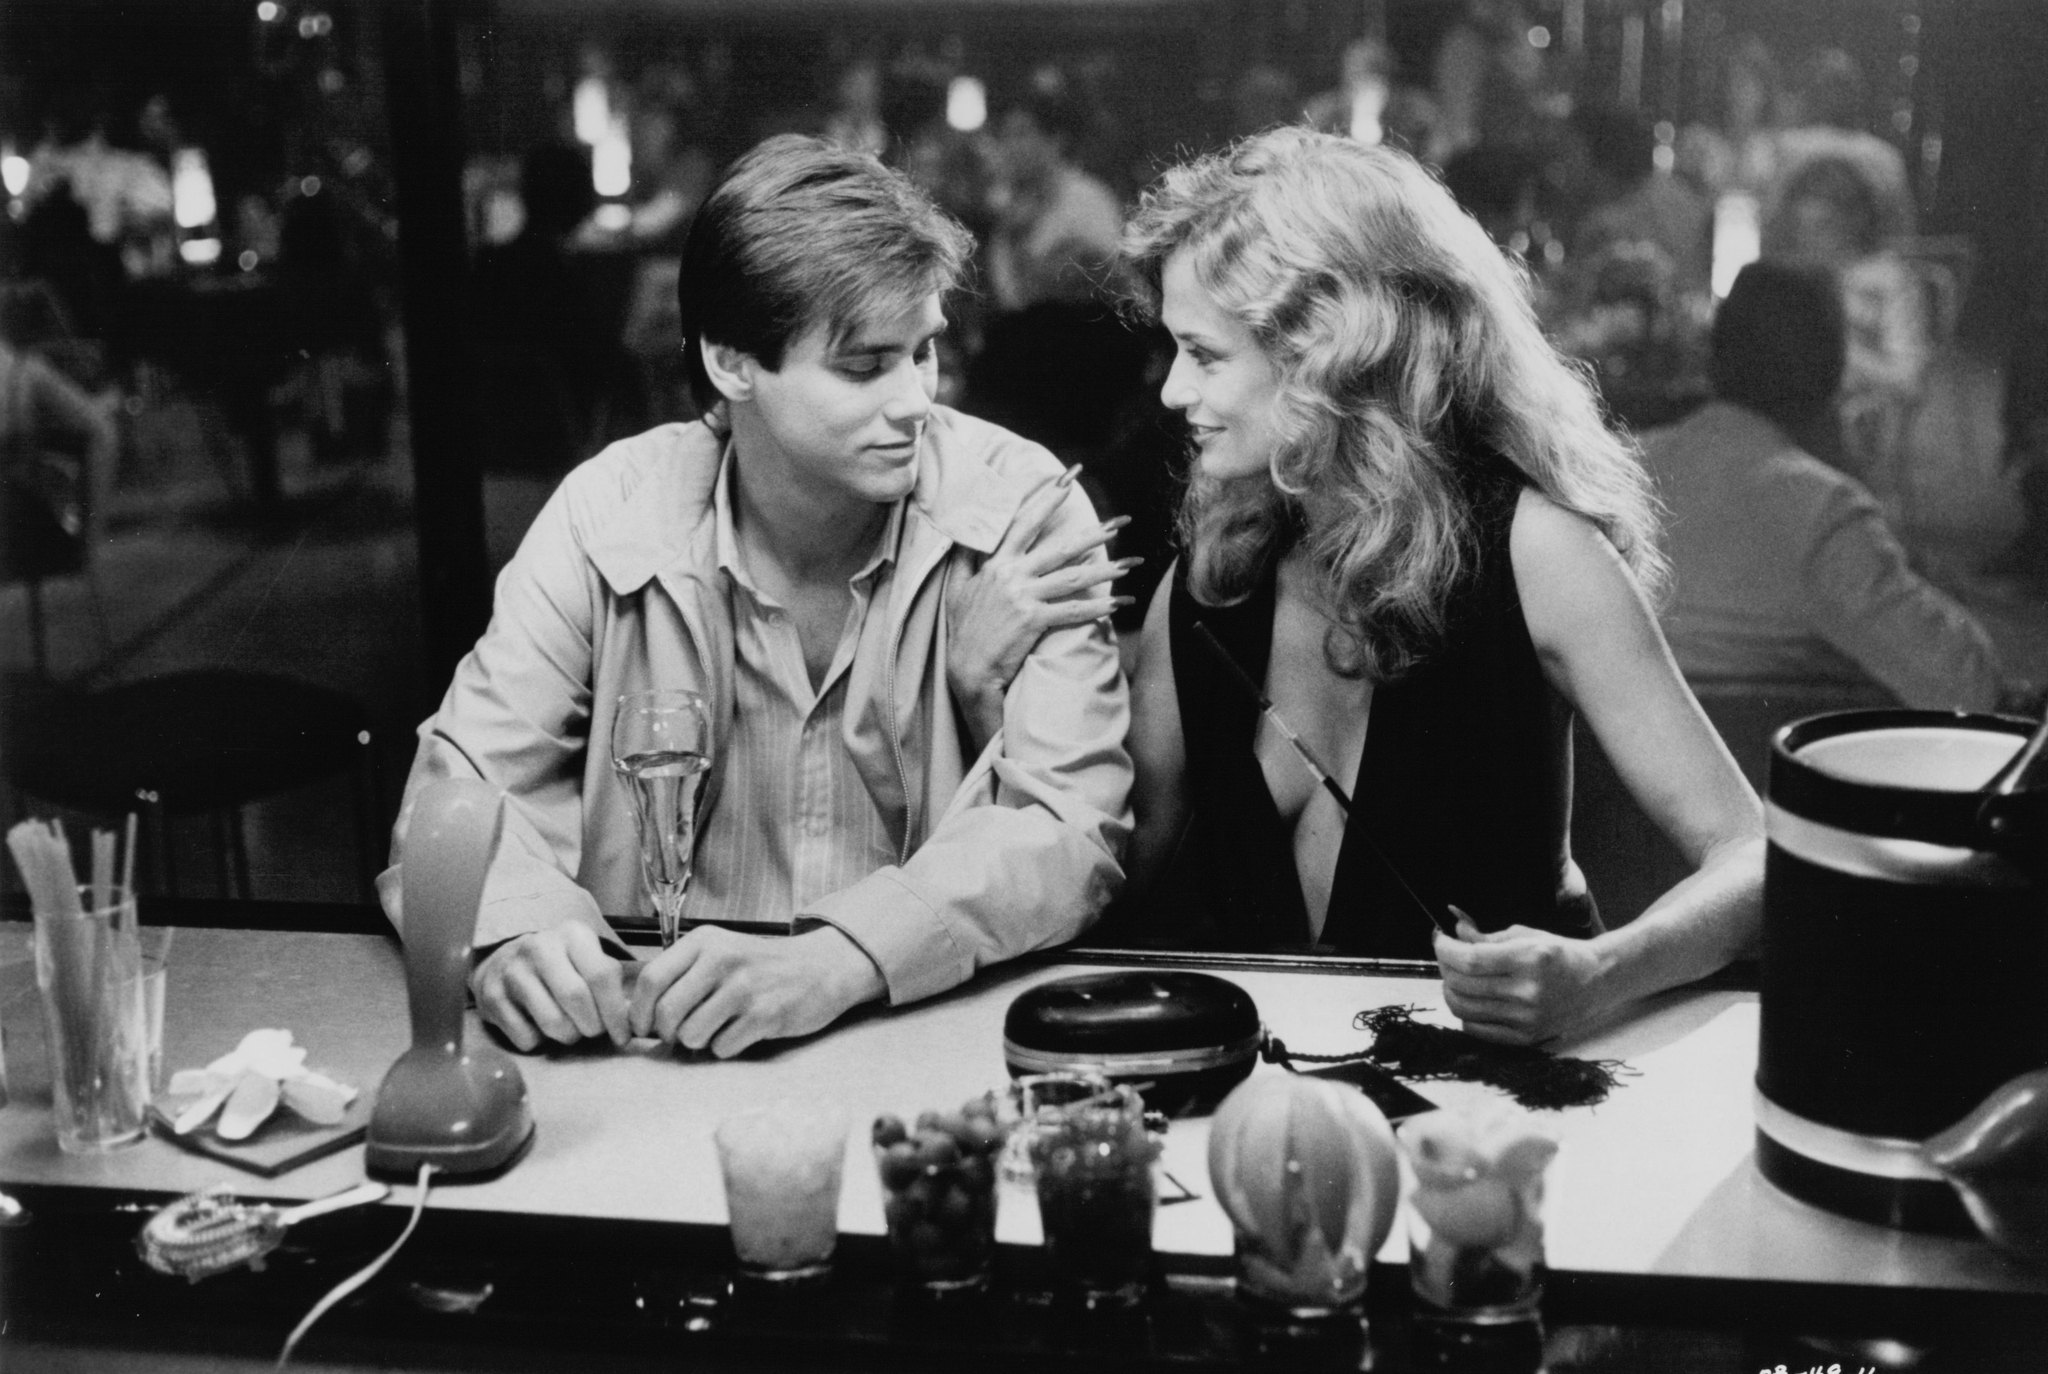 Still of Jim Carrey and Lauren Hutton in Once Bitten (1985)